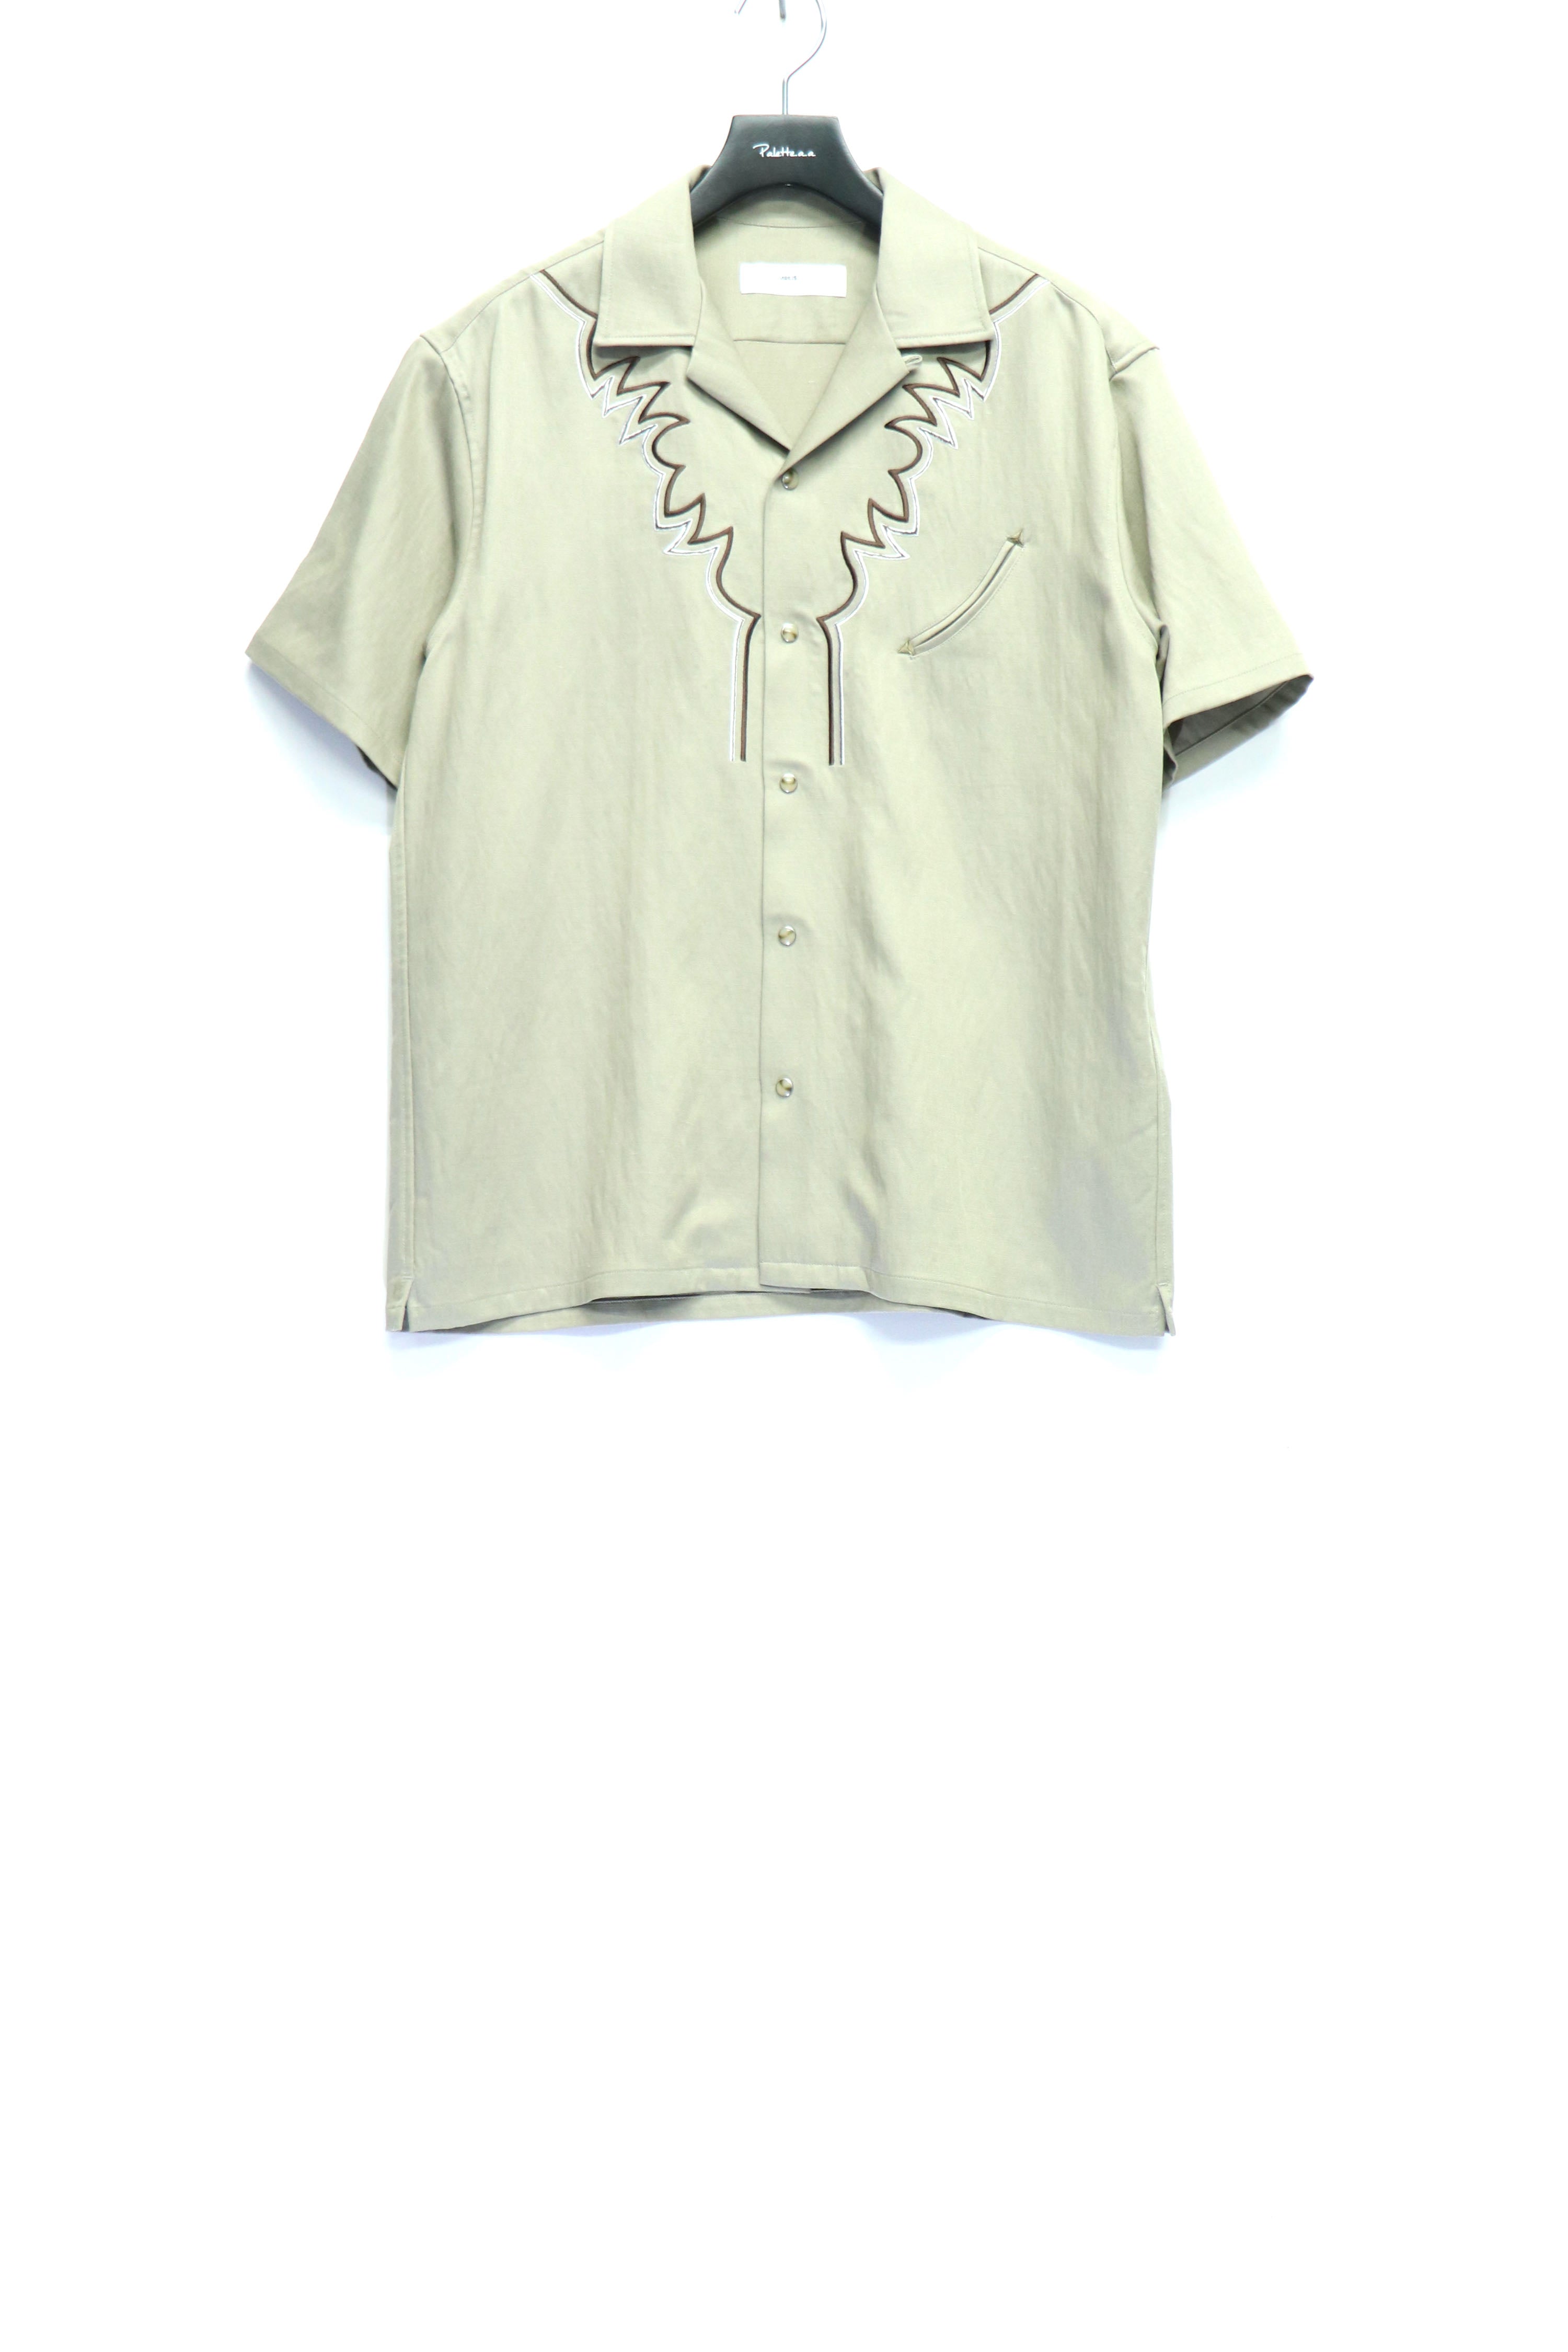 TOGA VIRILIS(トーガ ビリリース)のEmbroidery western S/S shirt ...